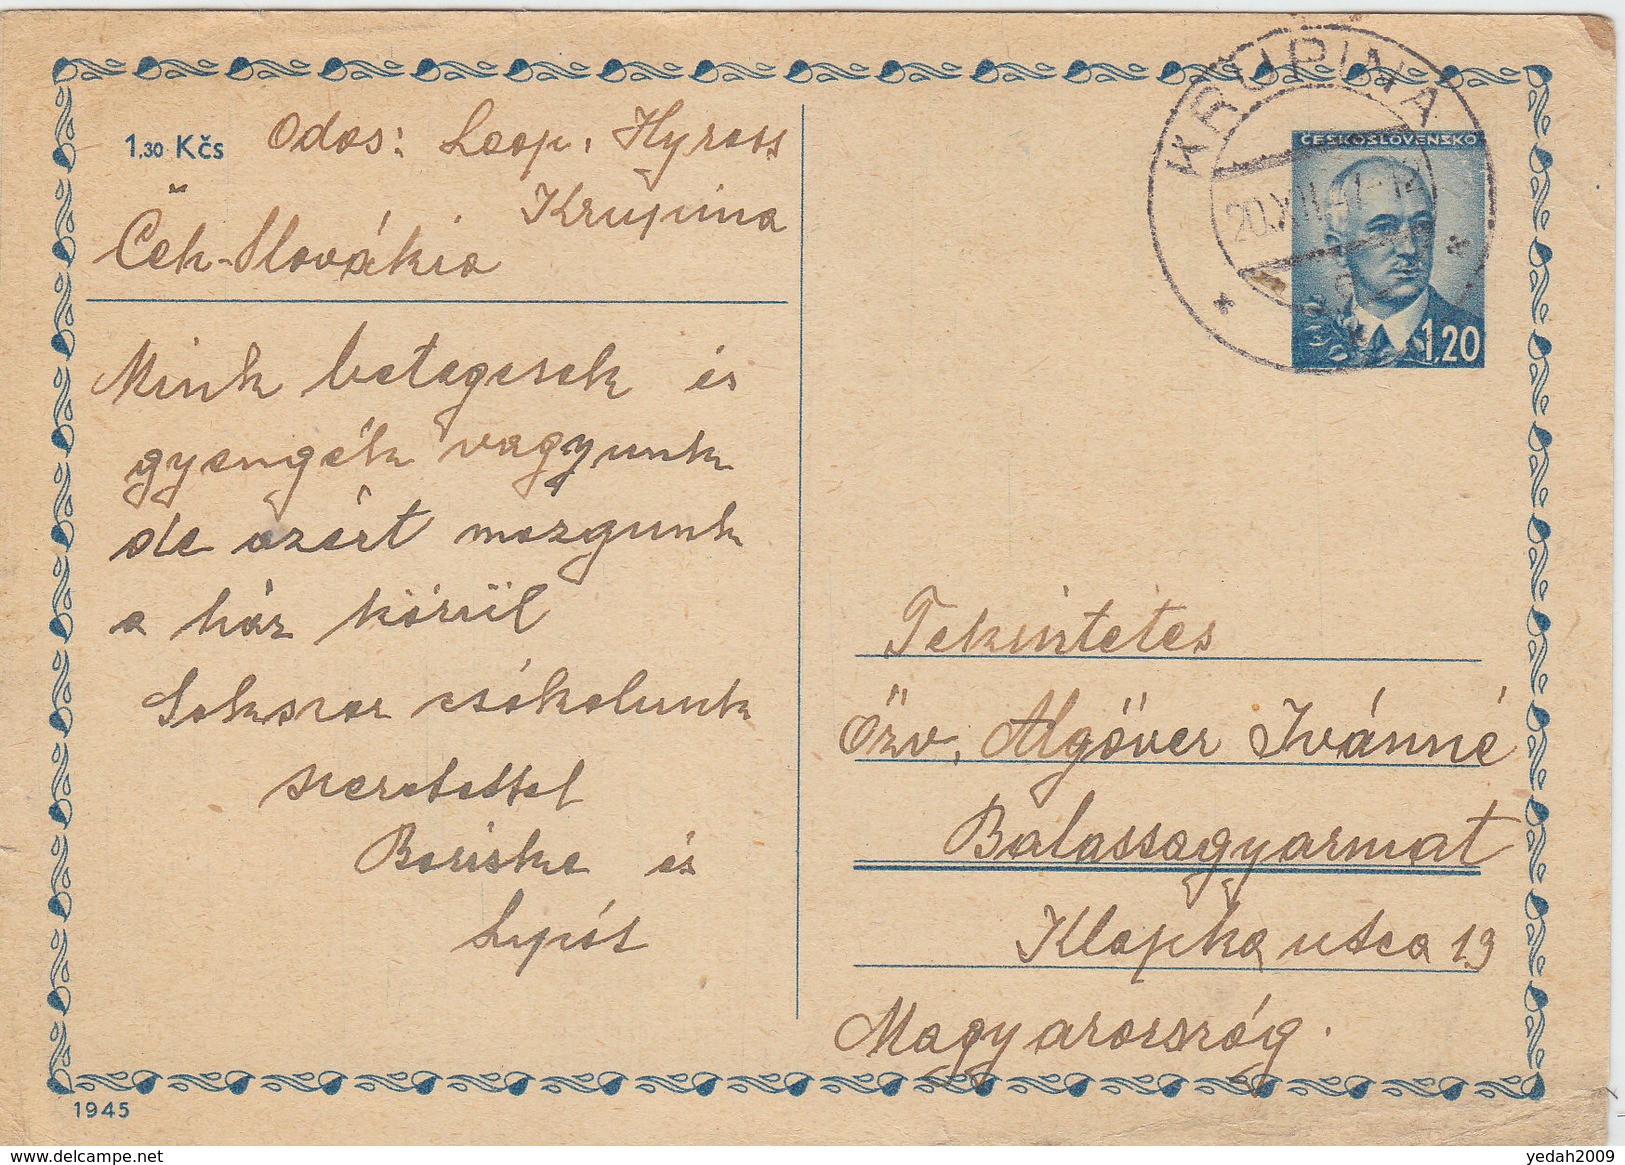 CZEHOSLOVAKIA POSTAL CARDS 1947 - Omslagen